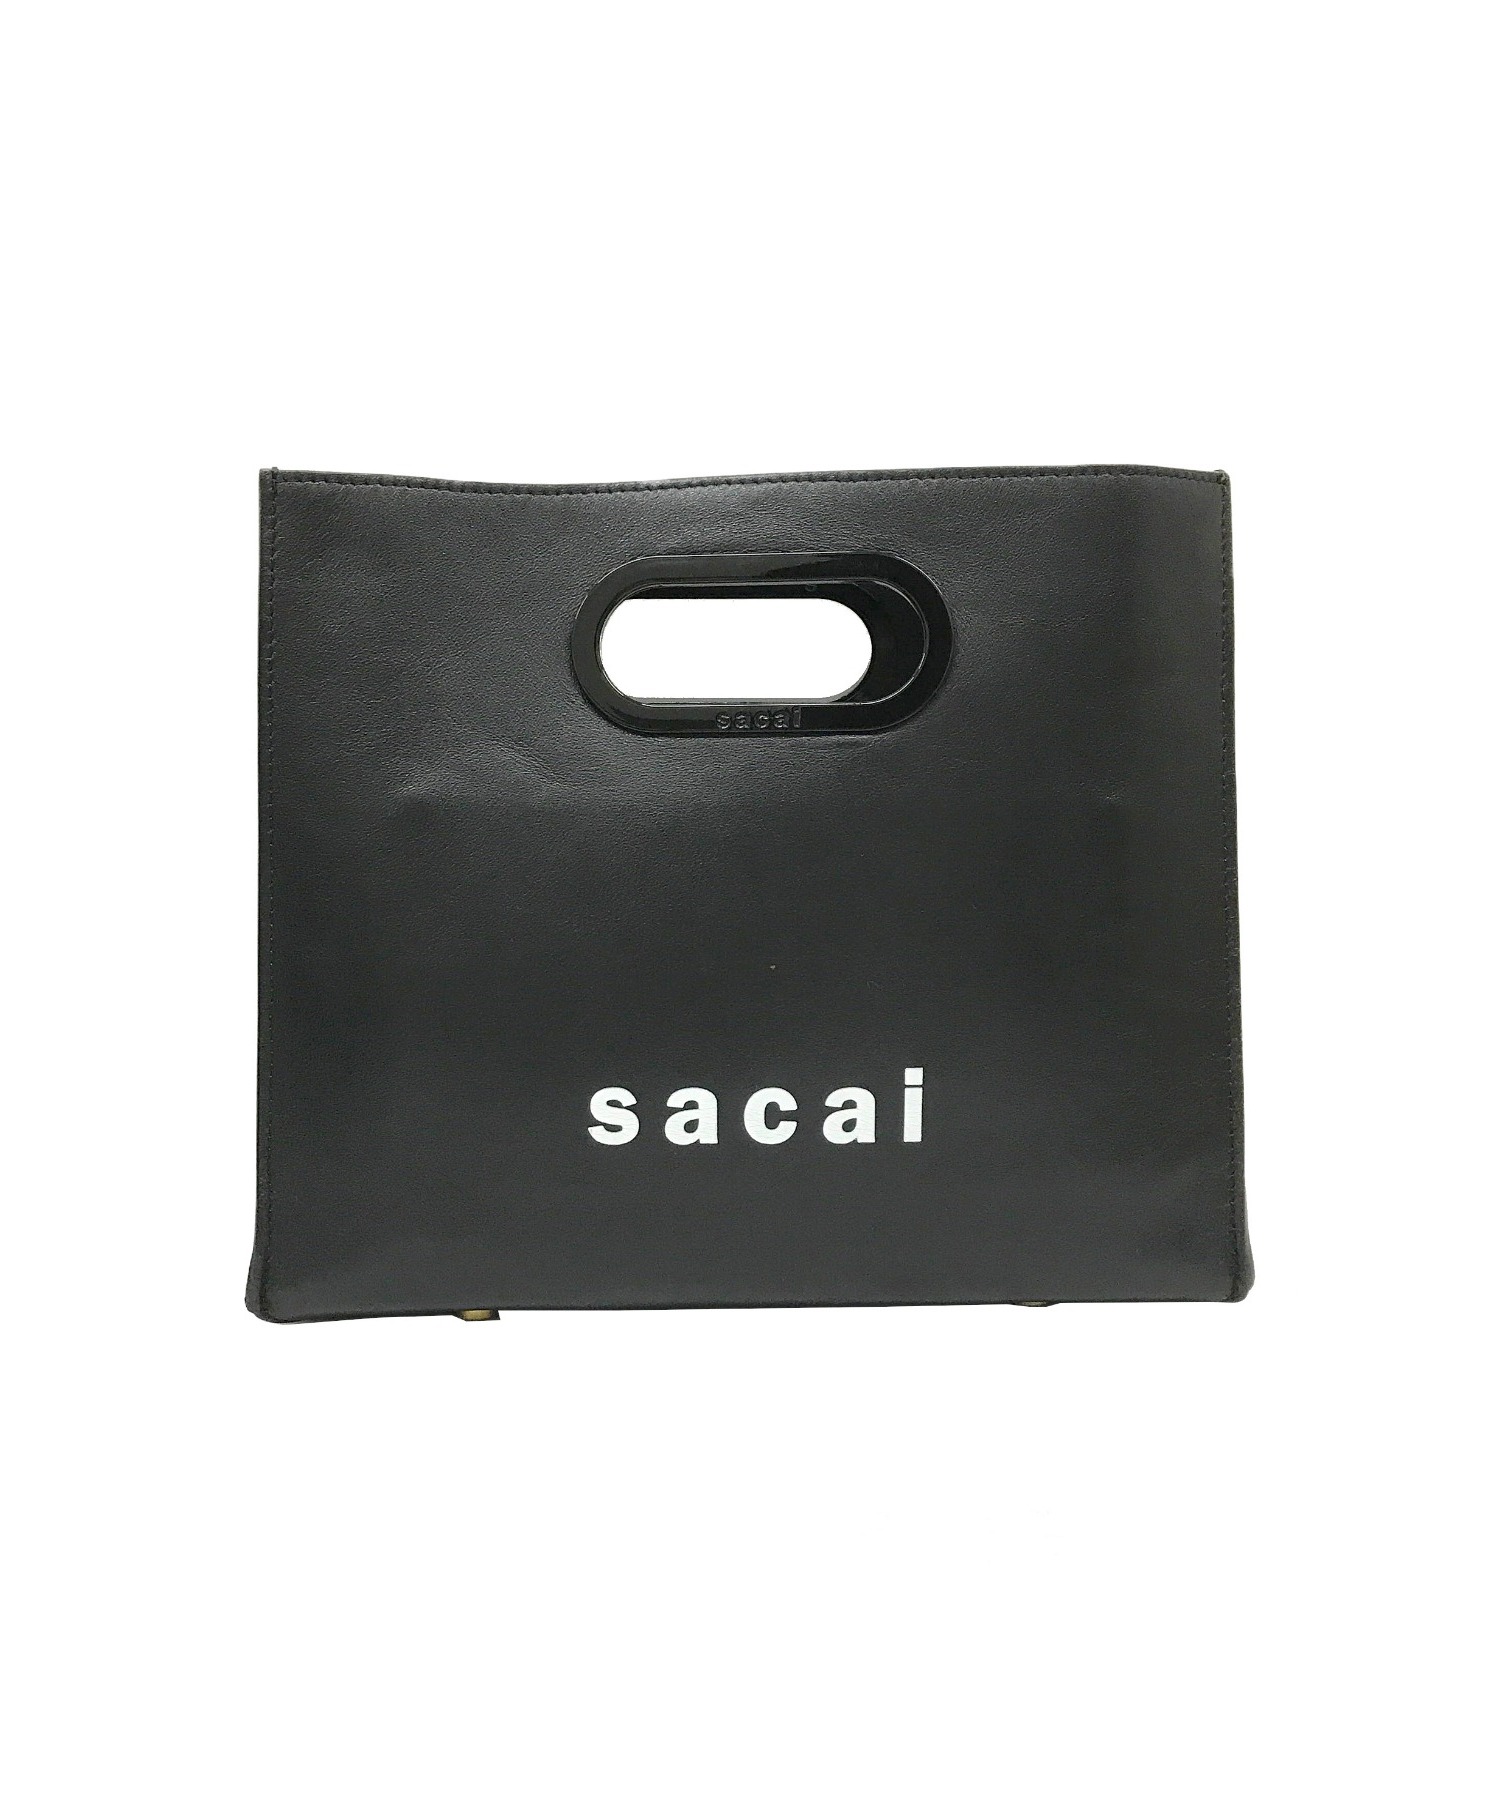 sacai (サカイ) ロゴハンドバッグ ブラック サイズ:下記参照 Logo Hand Bag